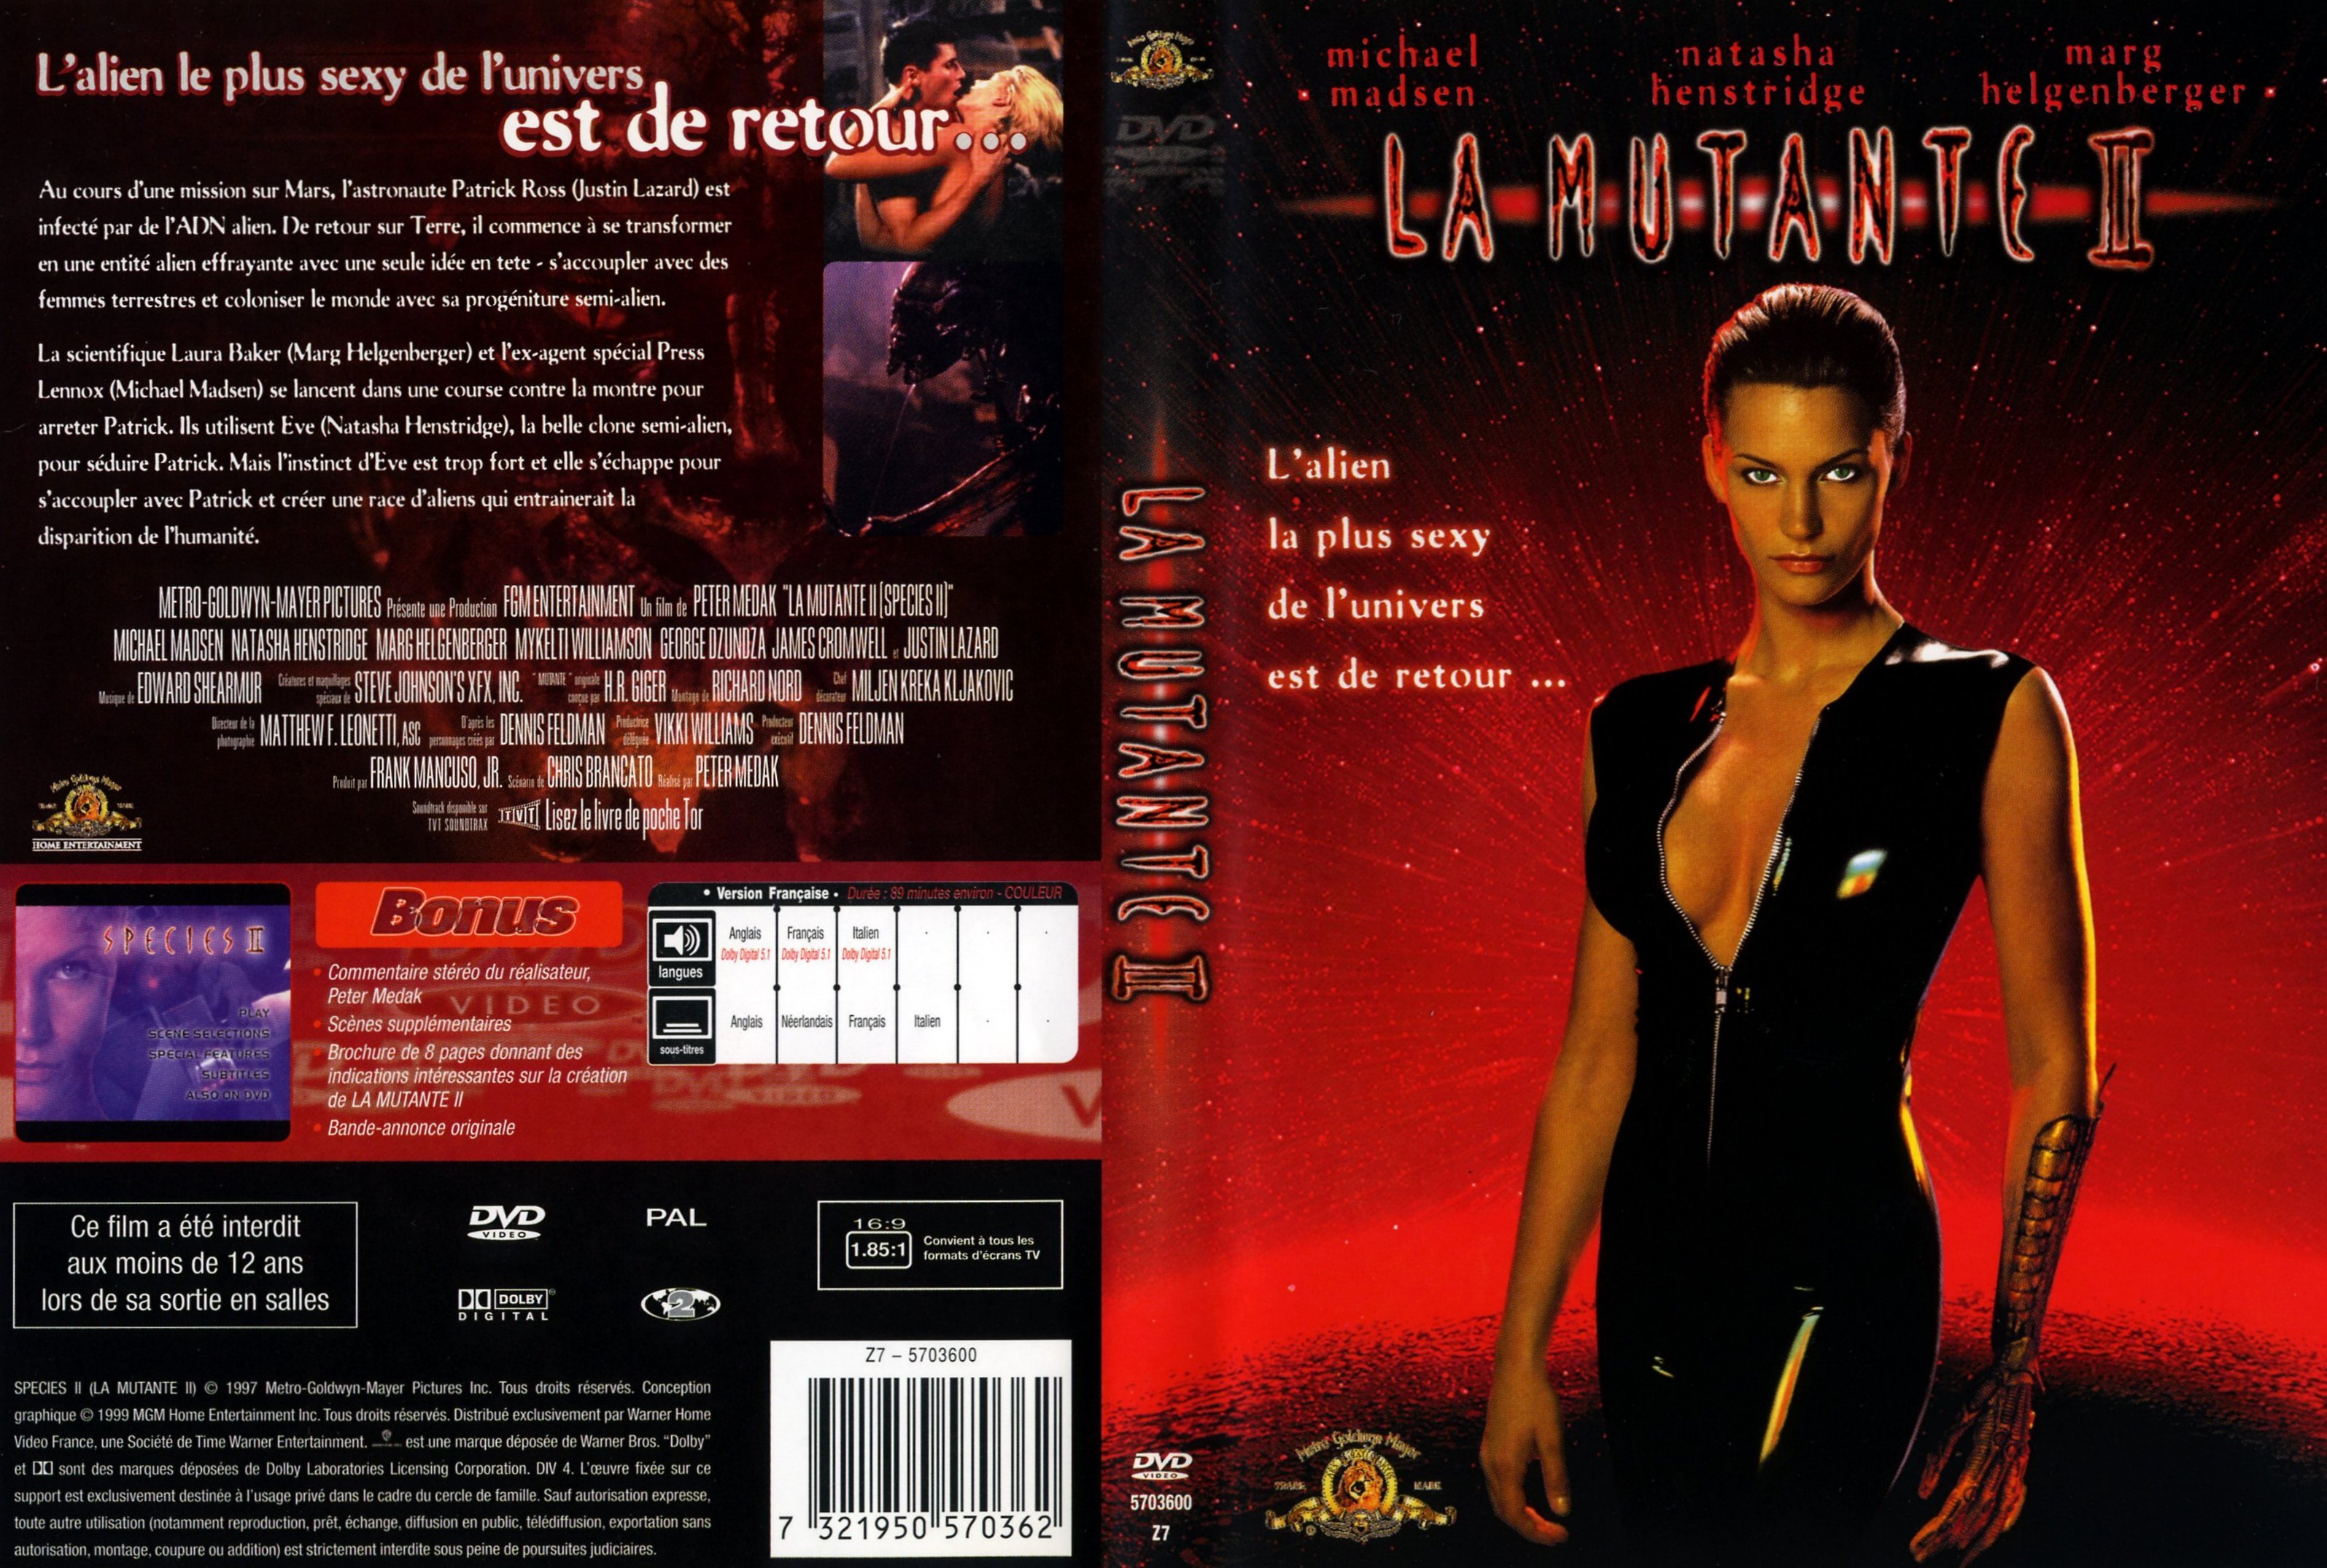 Jaquette DVD La mutante 2